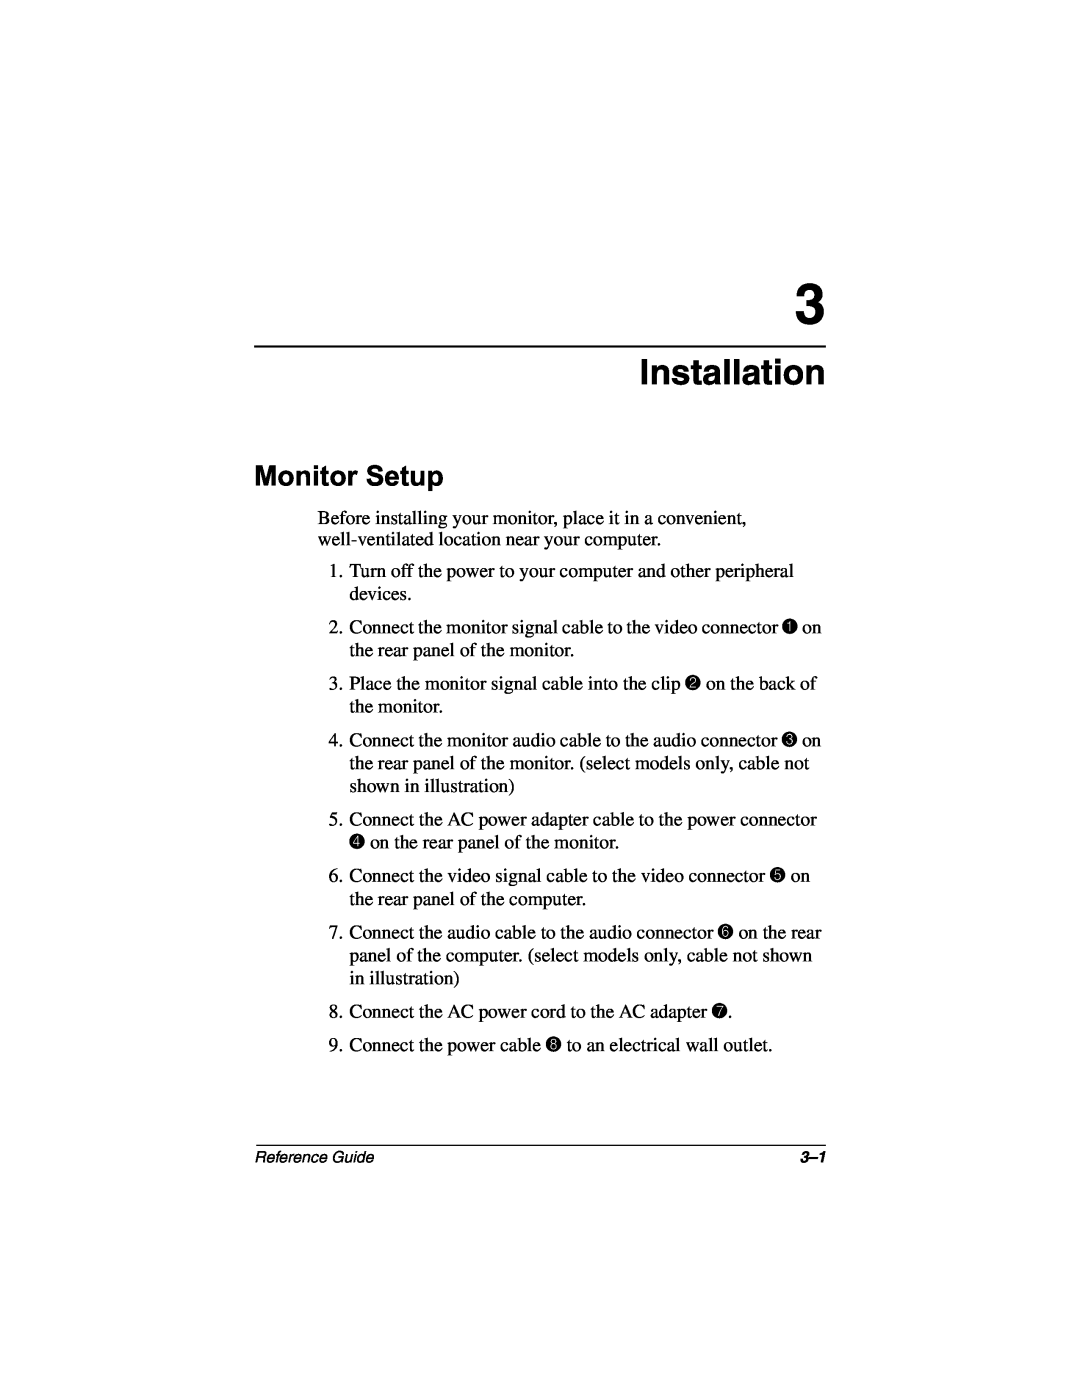 Compaq 5017 manual Installation, Monitor Setup 